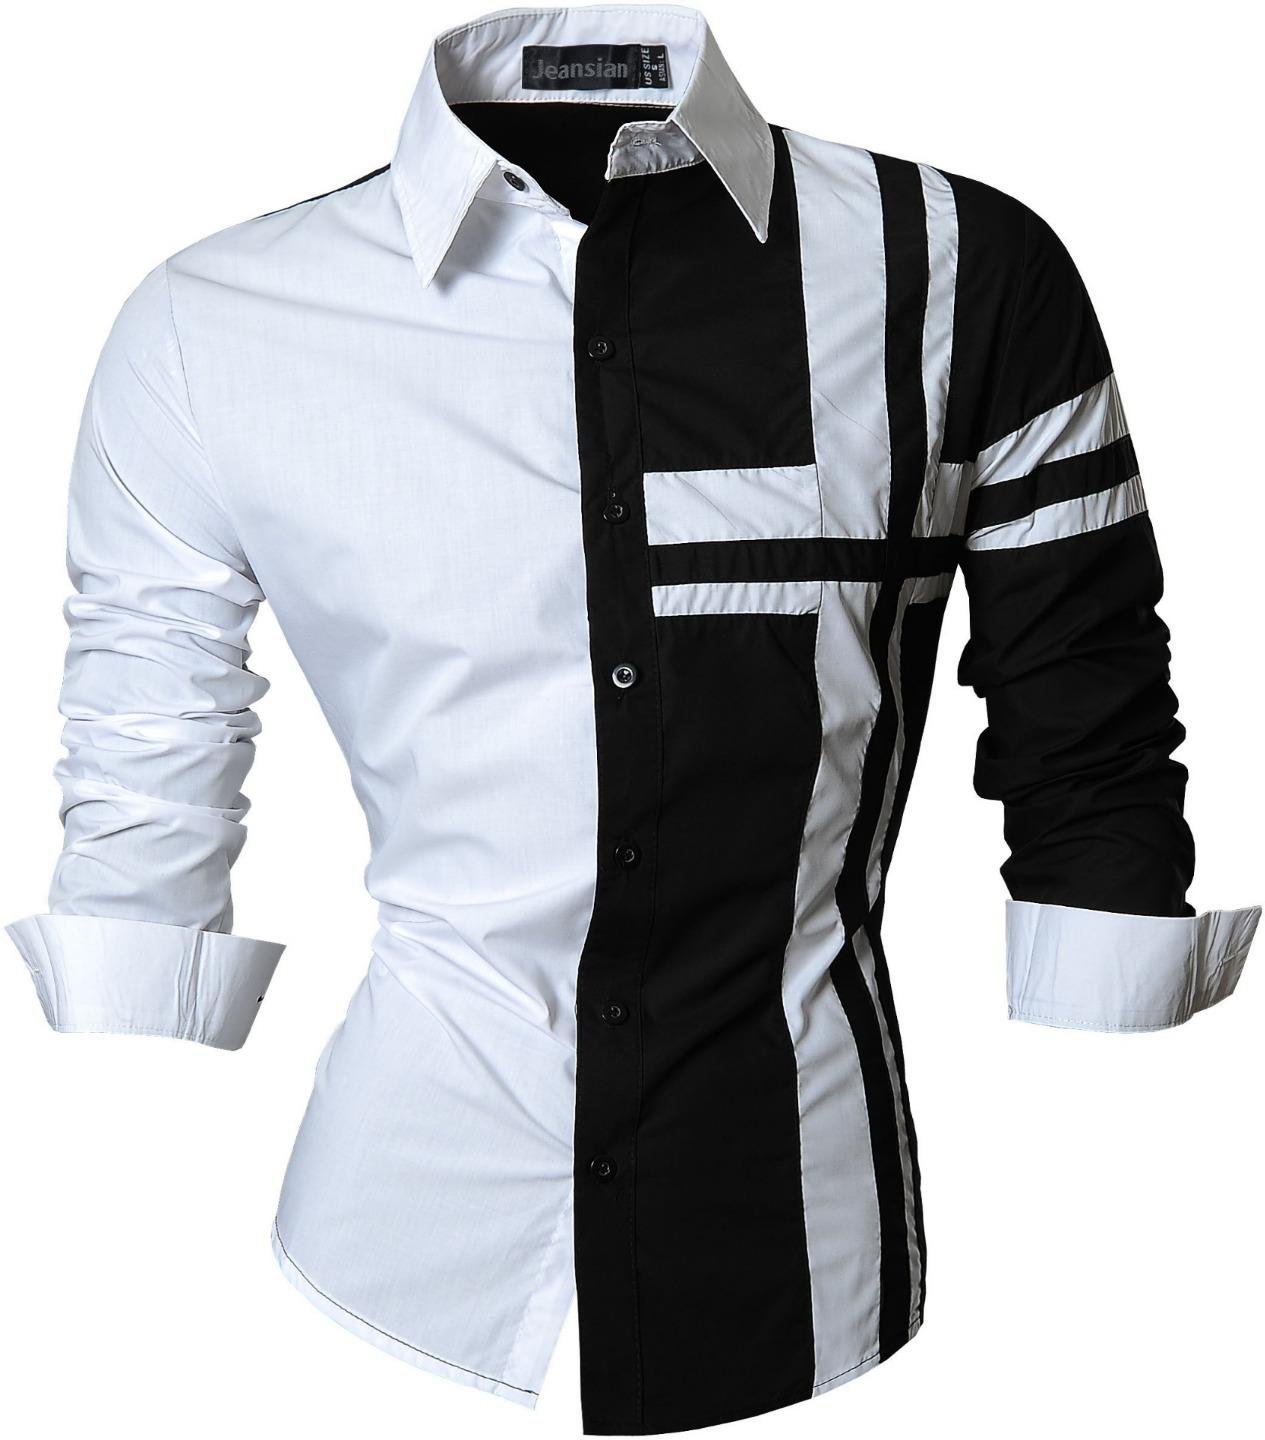 jeansian Herren Freizeit Hemden Shirt Tops Mode Langarmshirts Slim Fit Z014 Black M